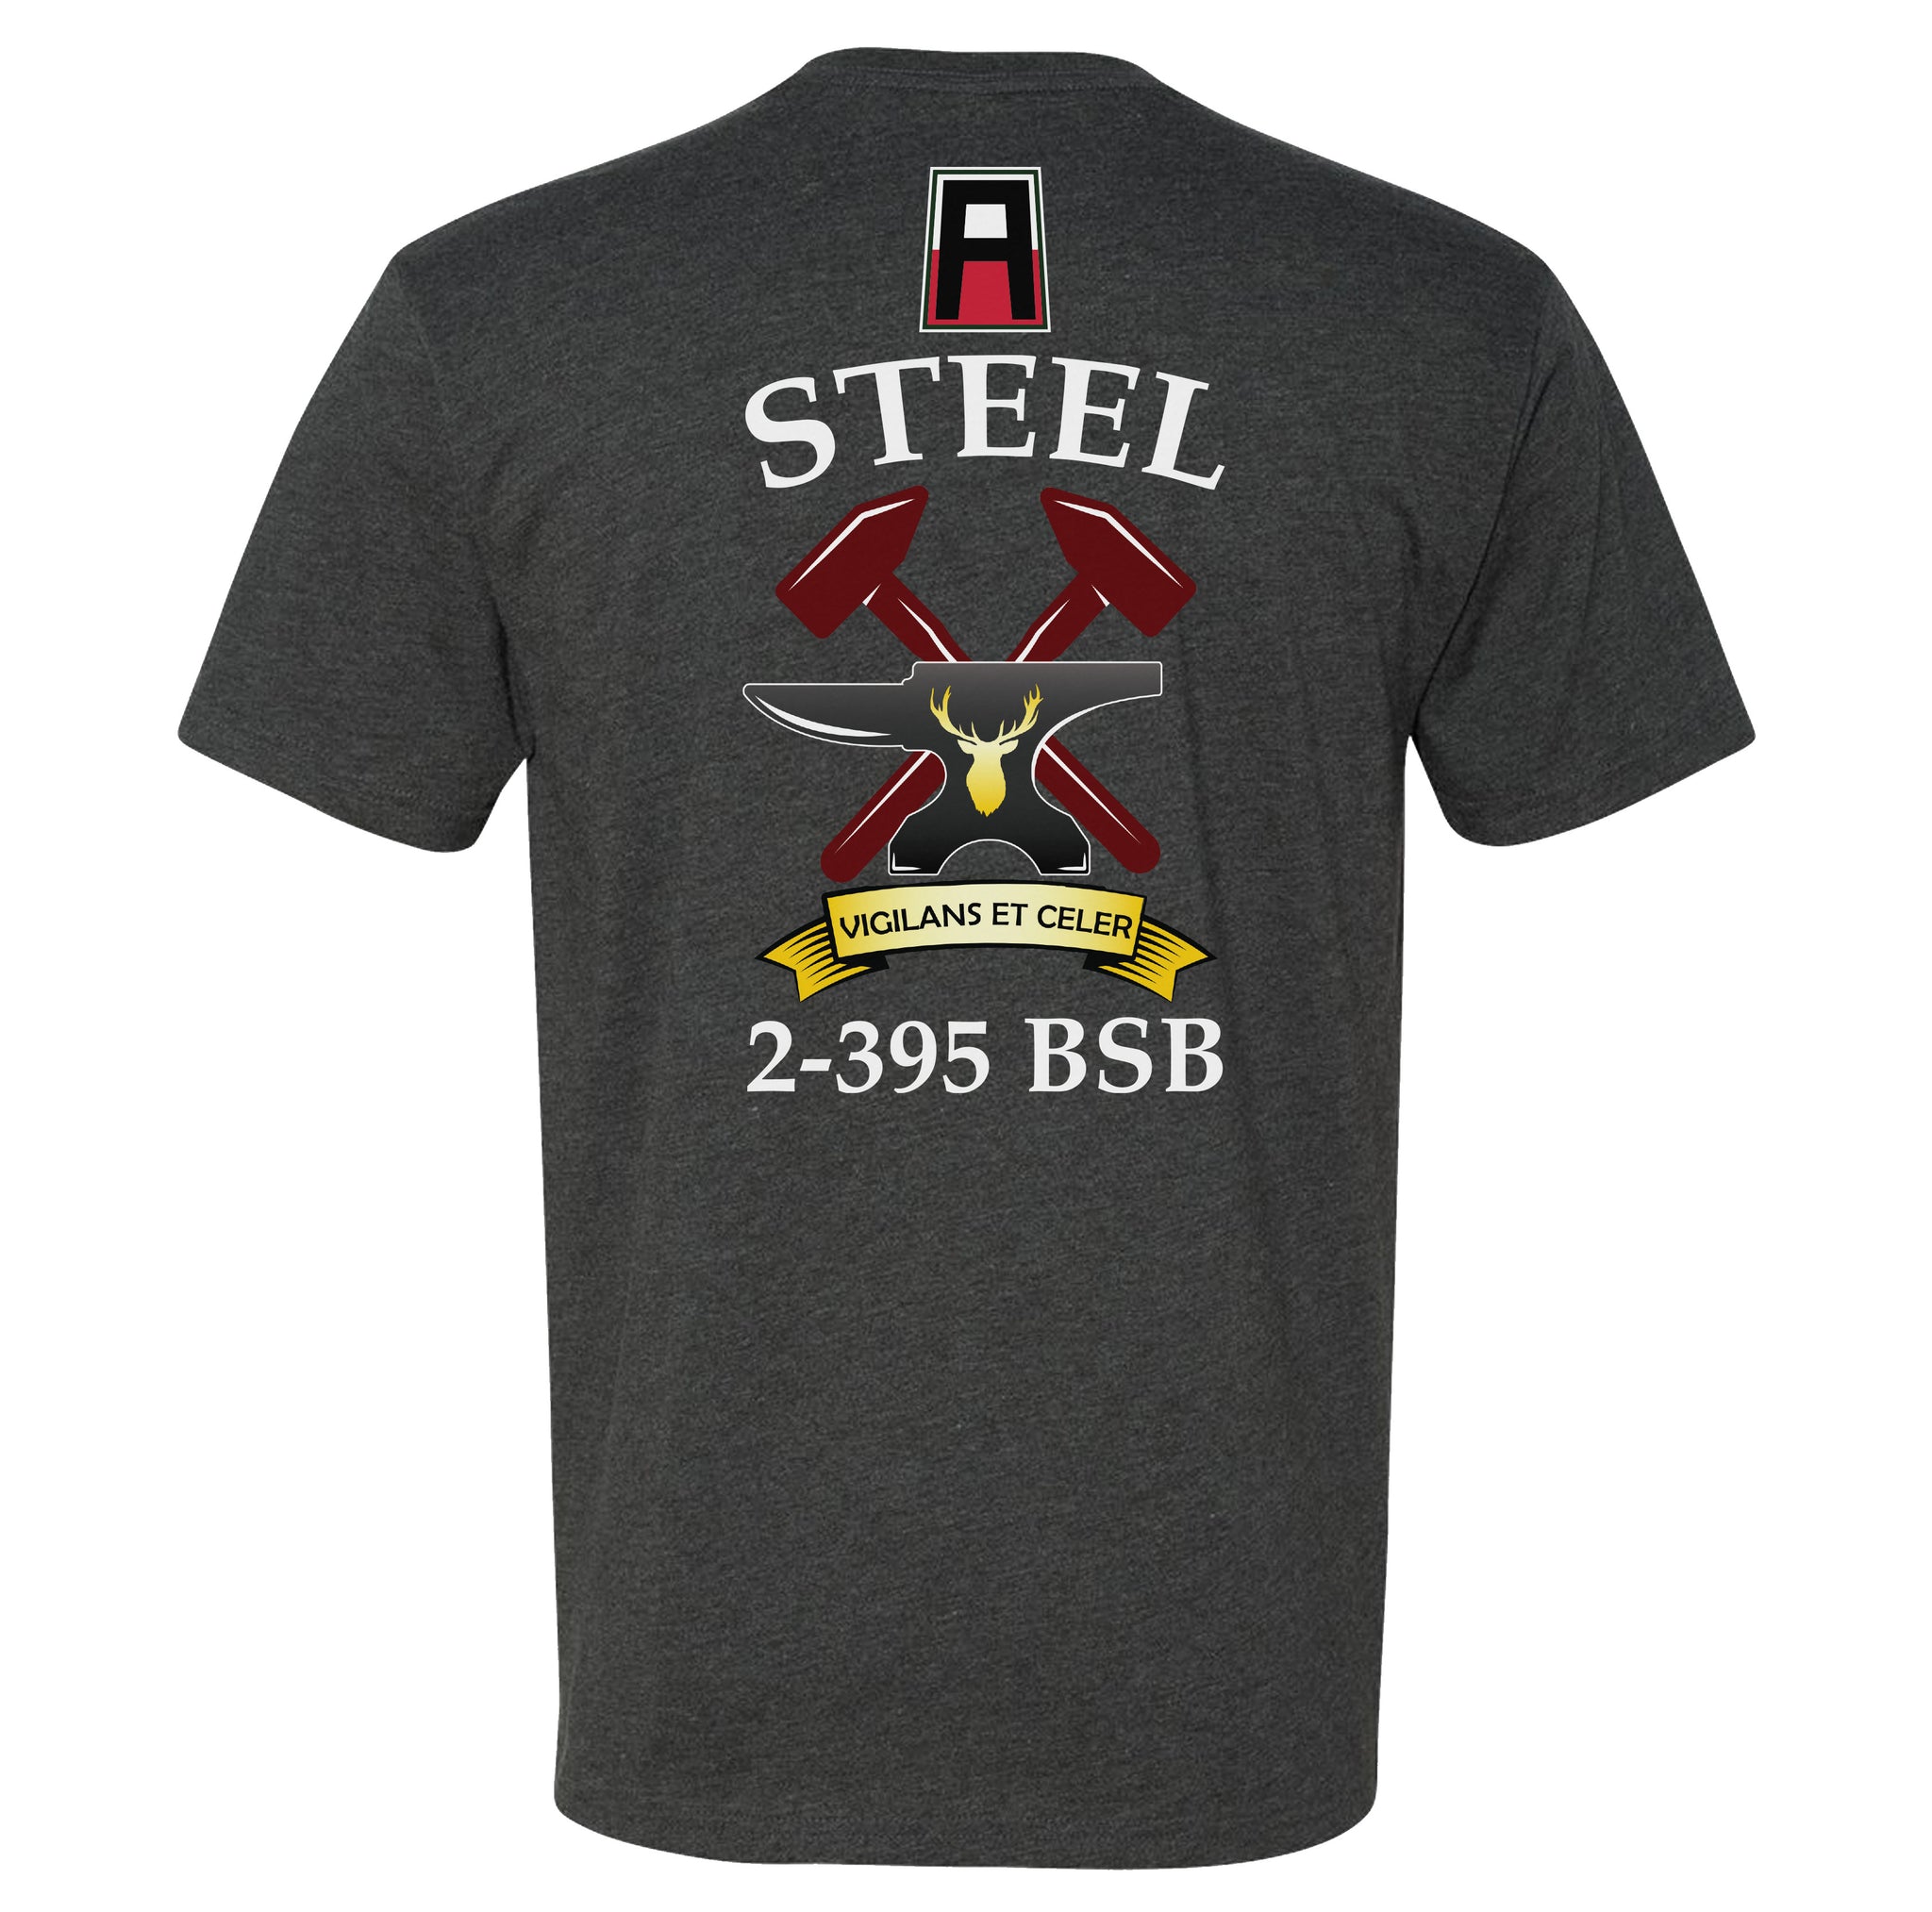 2-395th Steel "Vigilans Et Celer" Tee